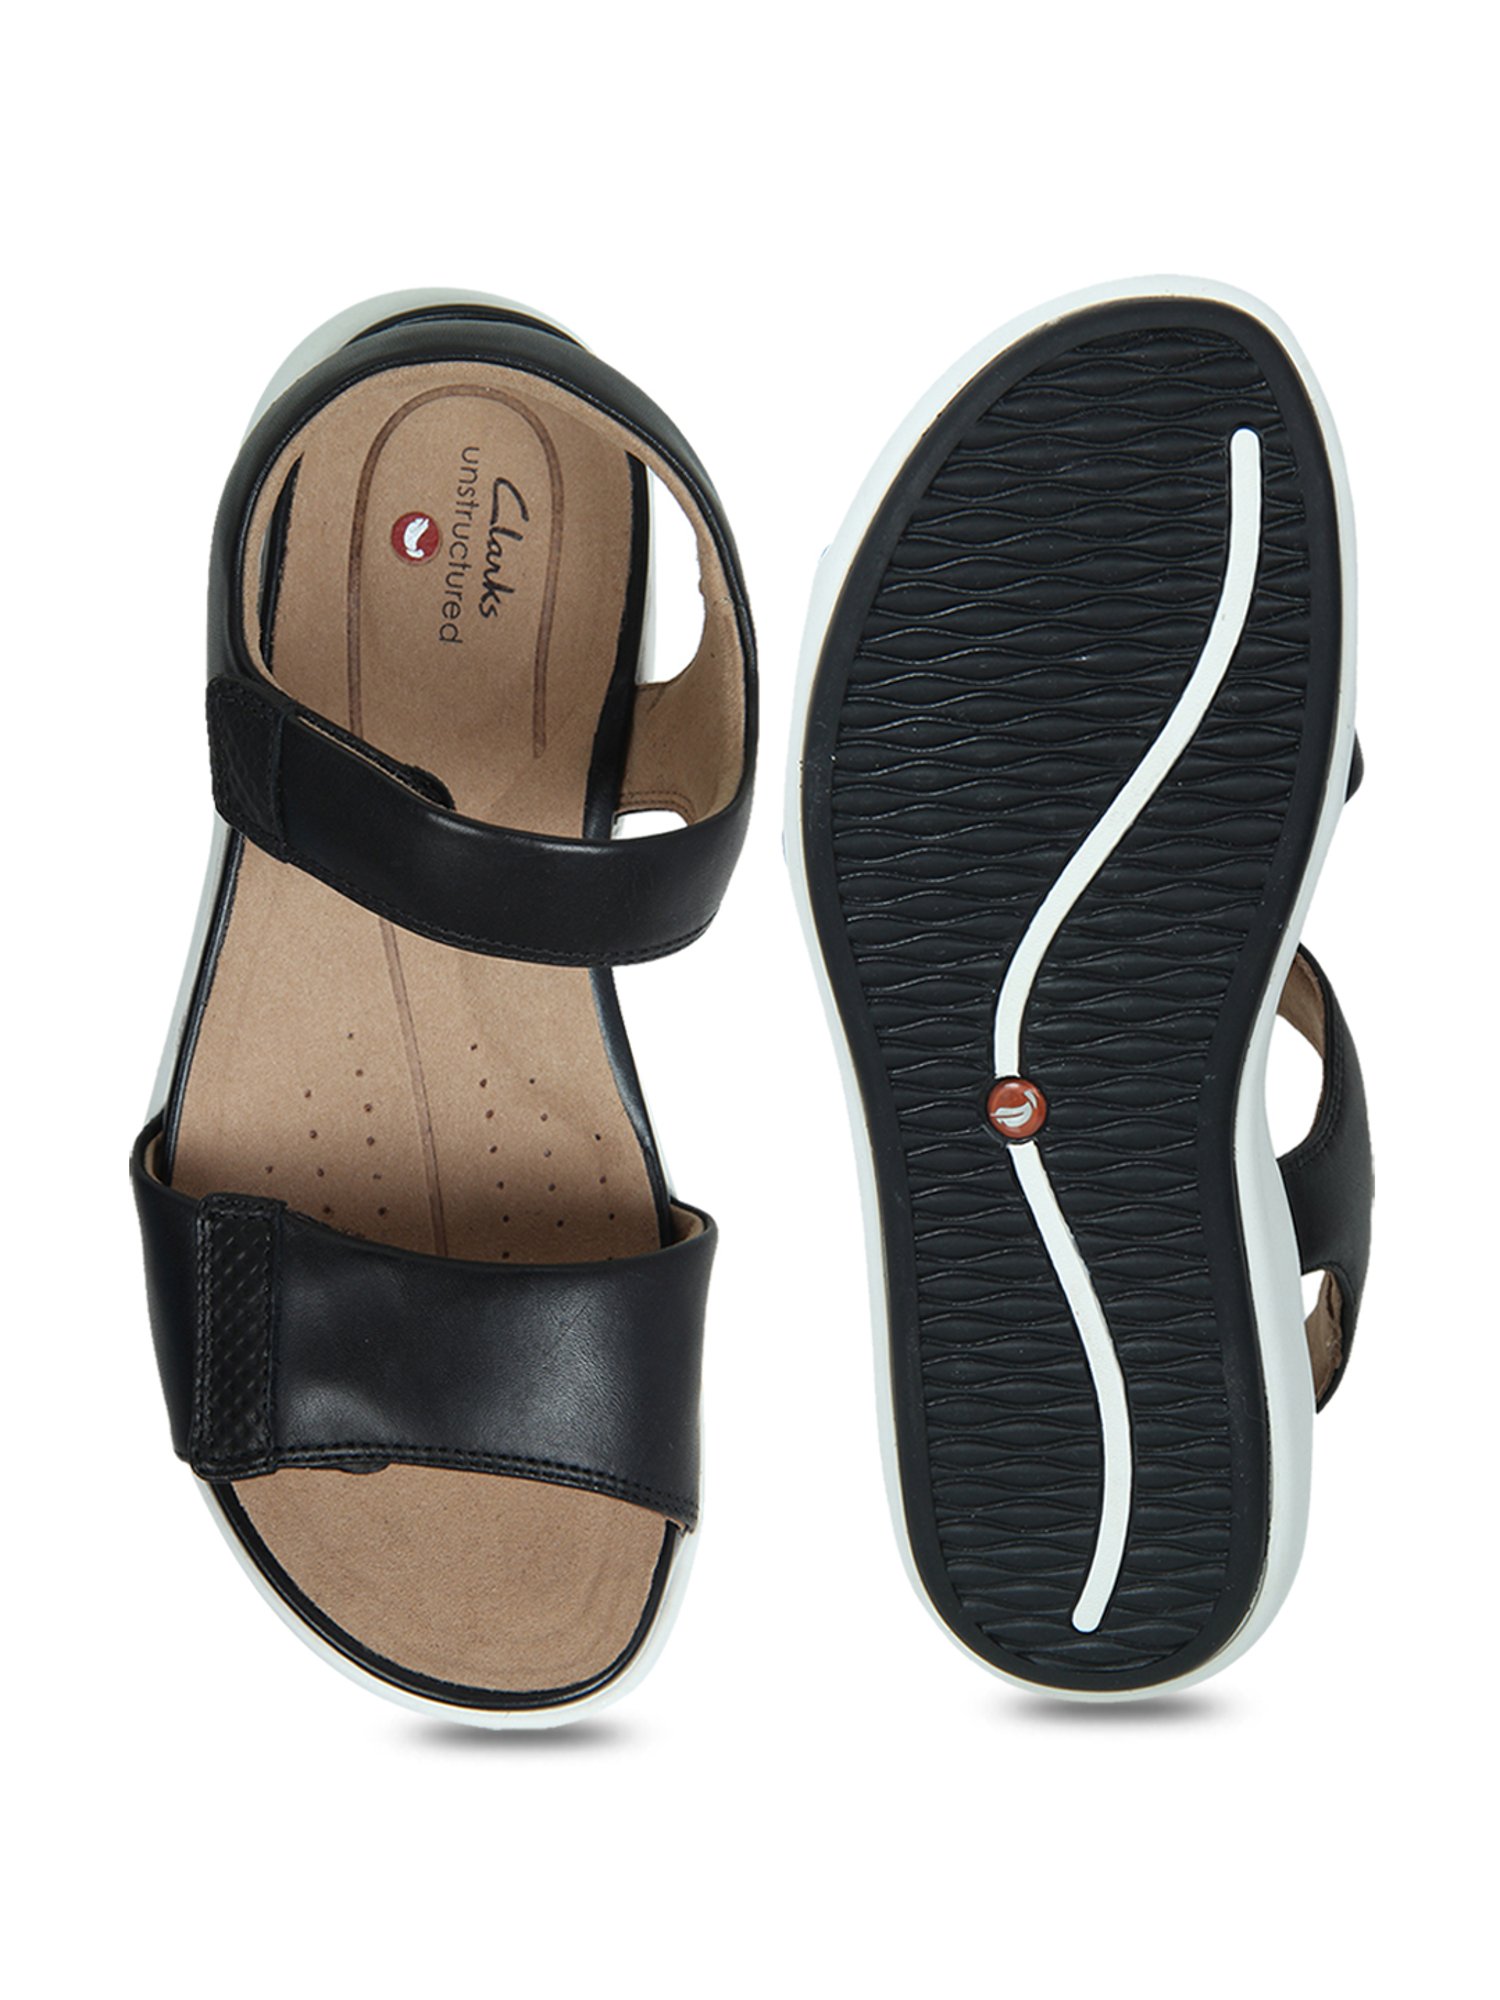 Clarks Unstructured Leather Sandals For Men (Brown) S… - Gem